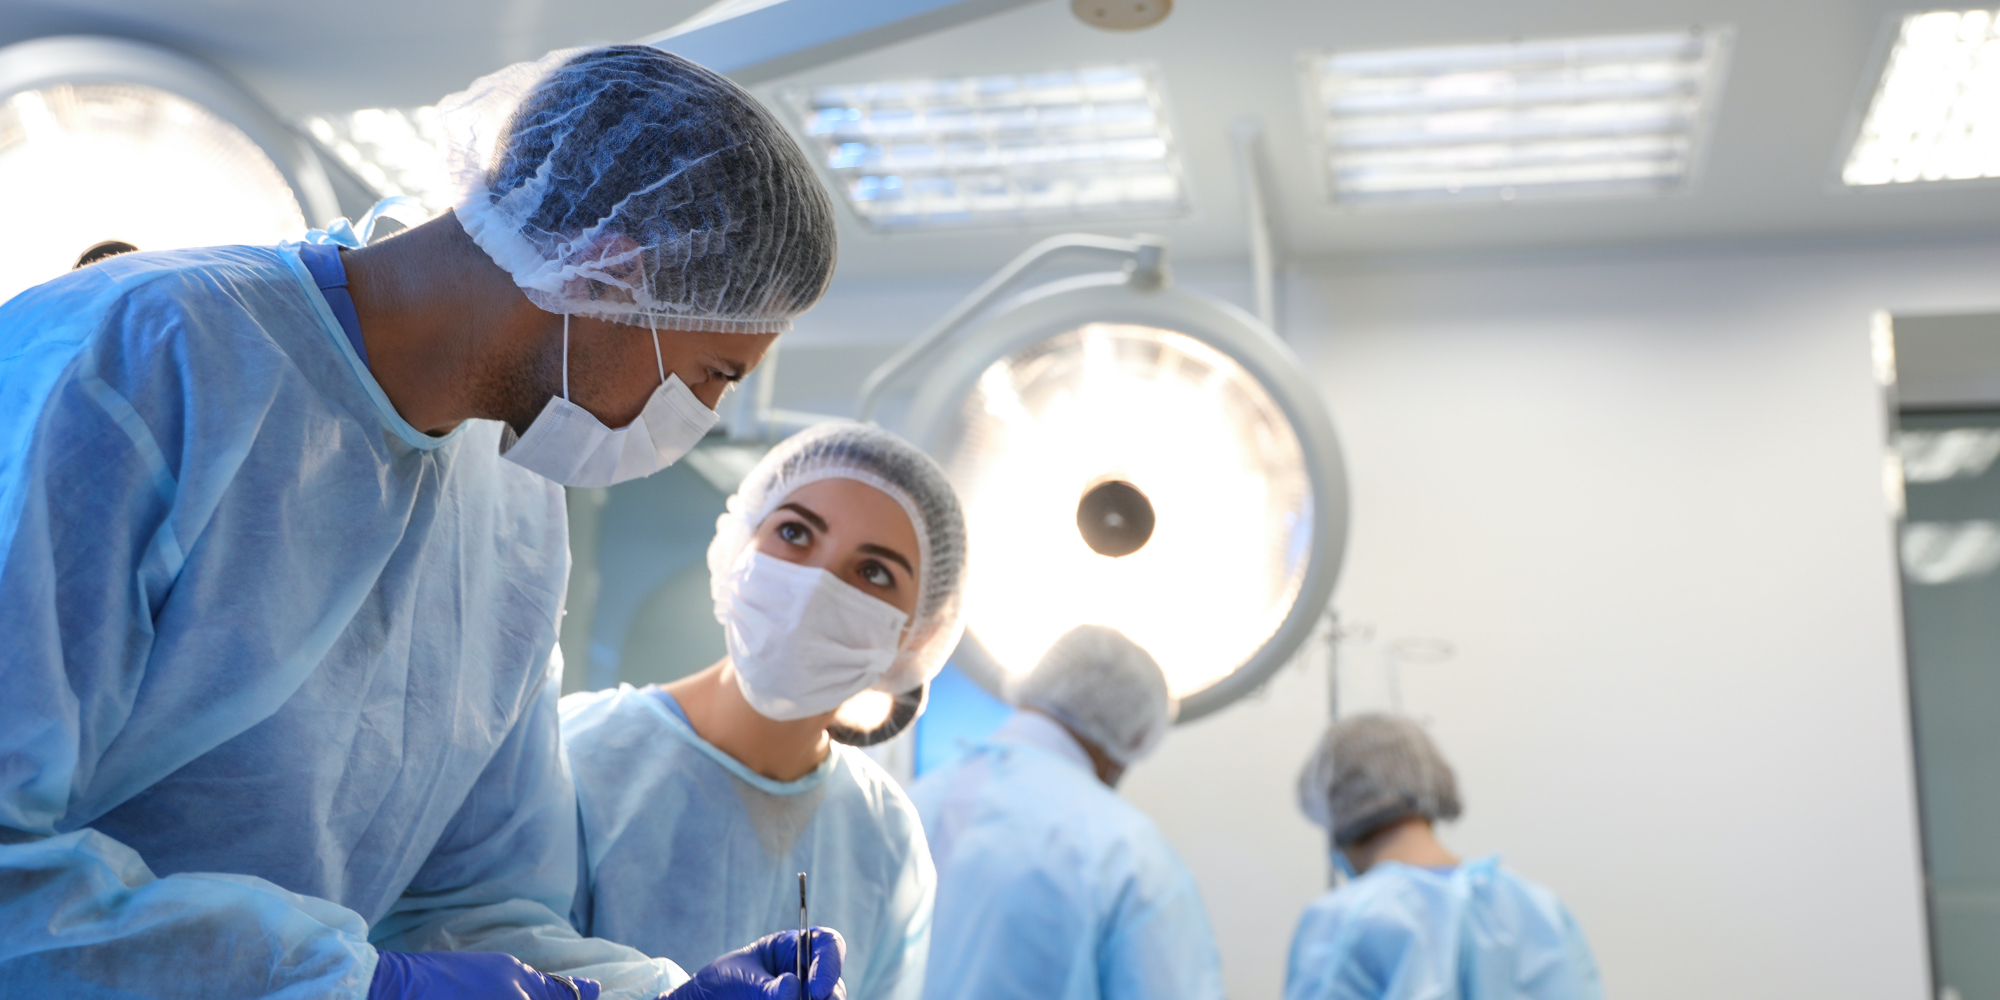 Doctors performing endoscopy